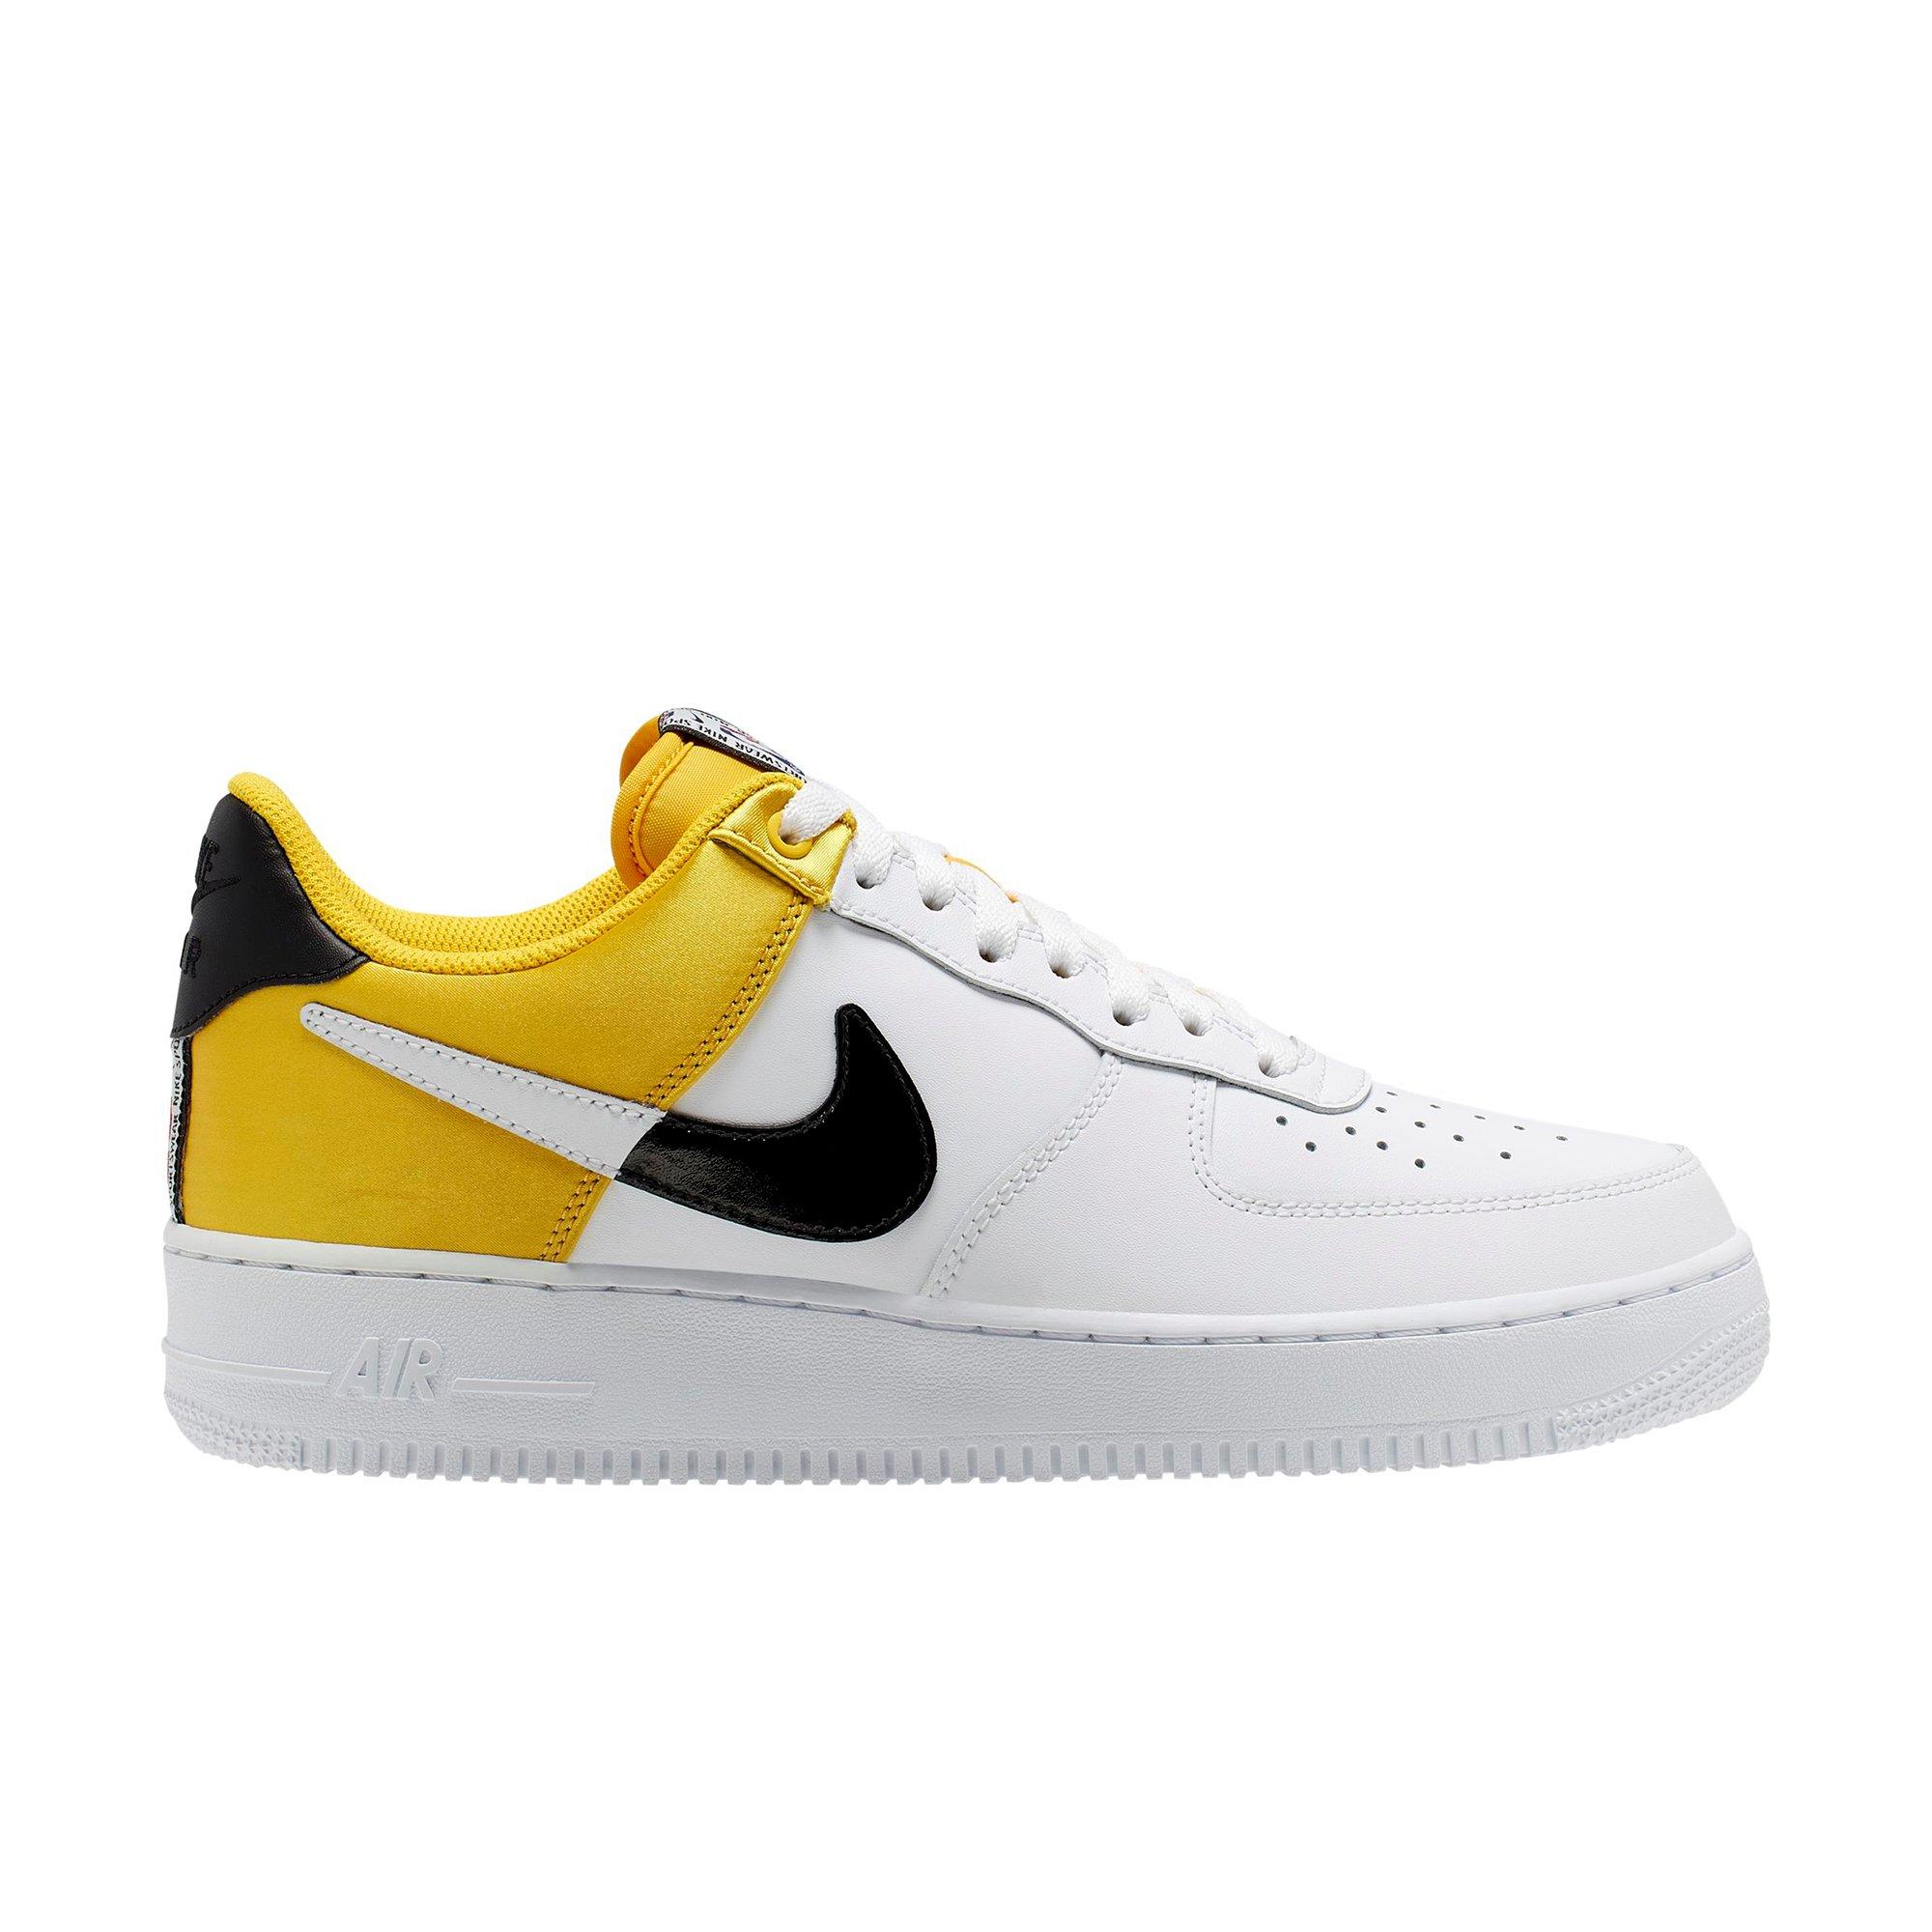 Secondly smuggling balanced Nike Air Force 1 '07 LV8 "Yellow/Black/White" Men's Shoe